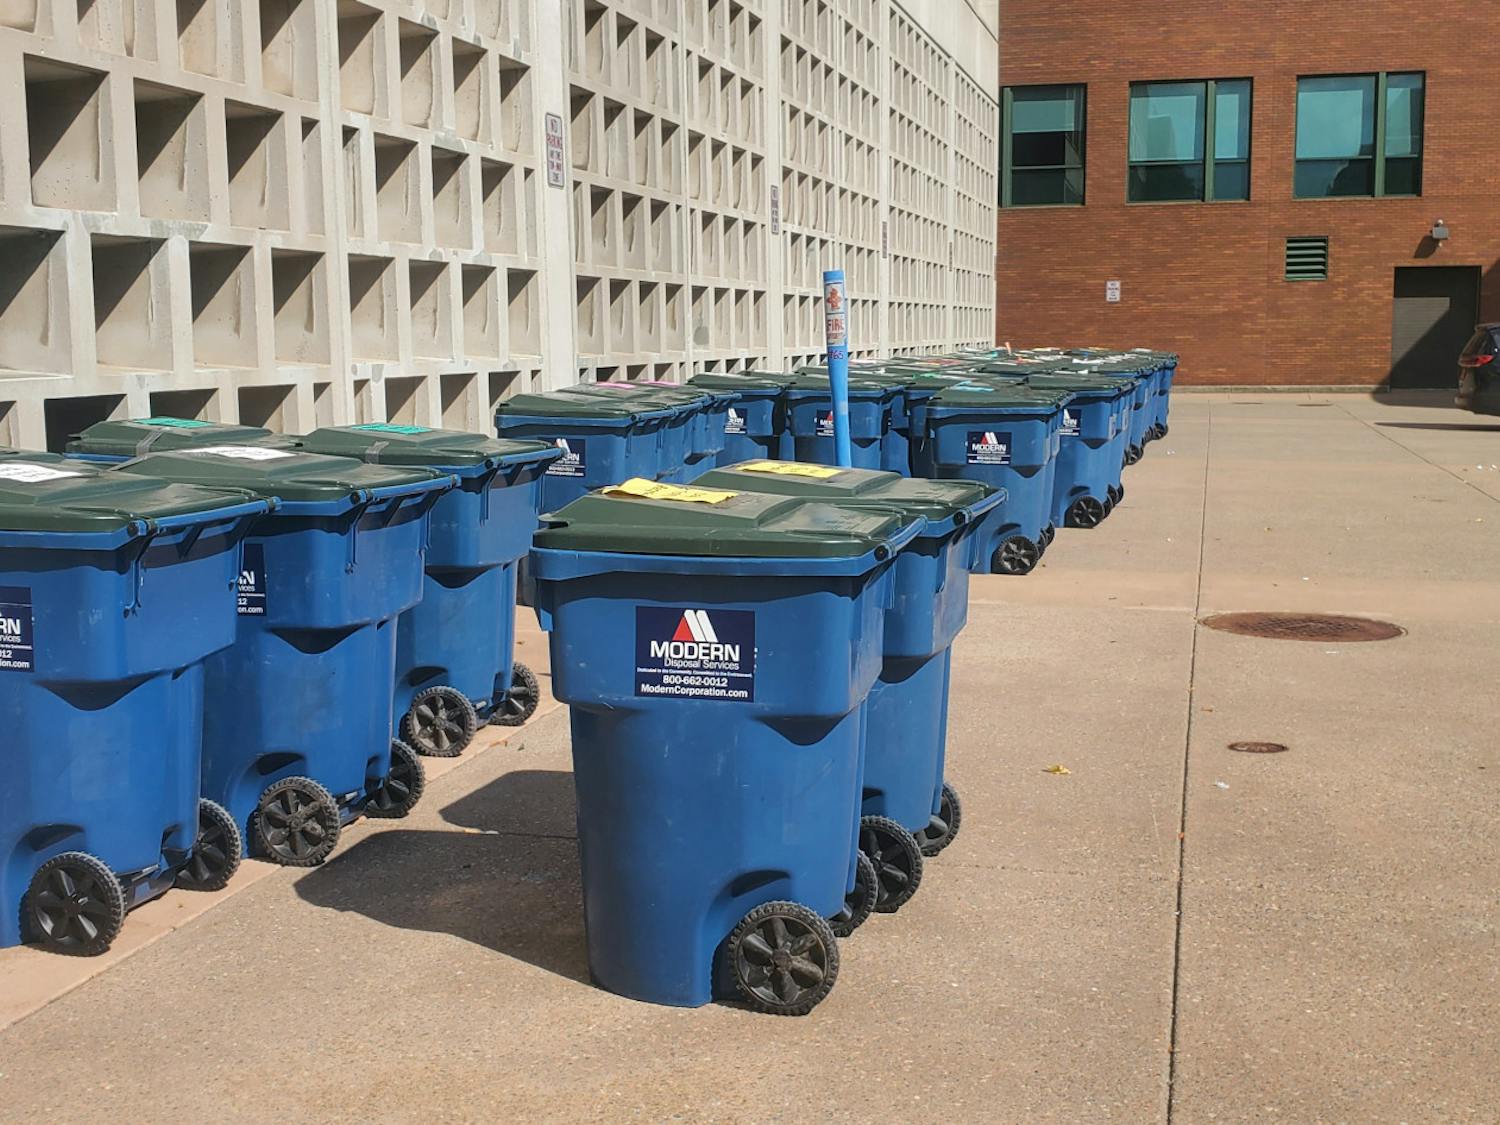 Waste bins on UB's North Campus.